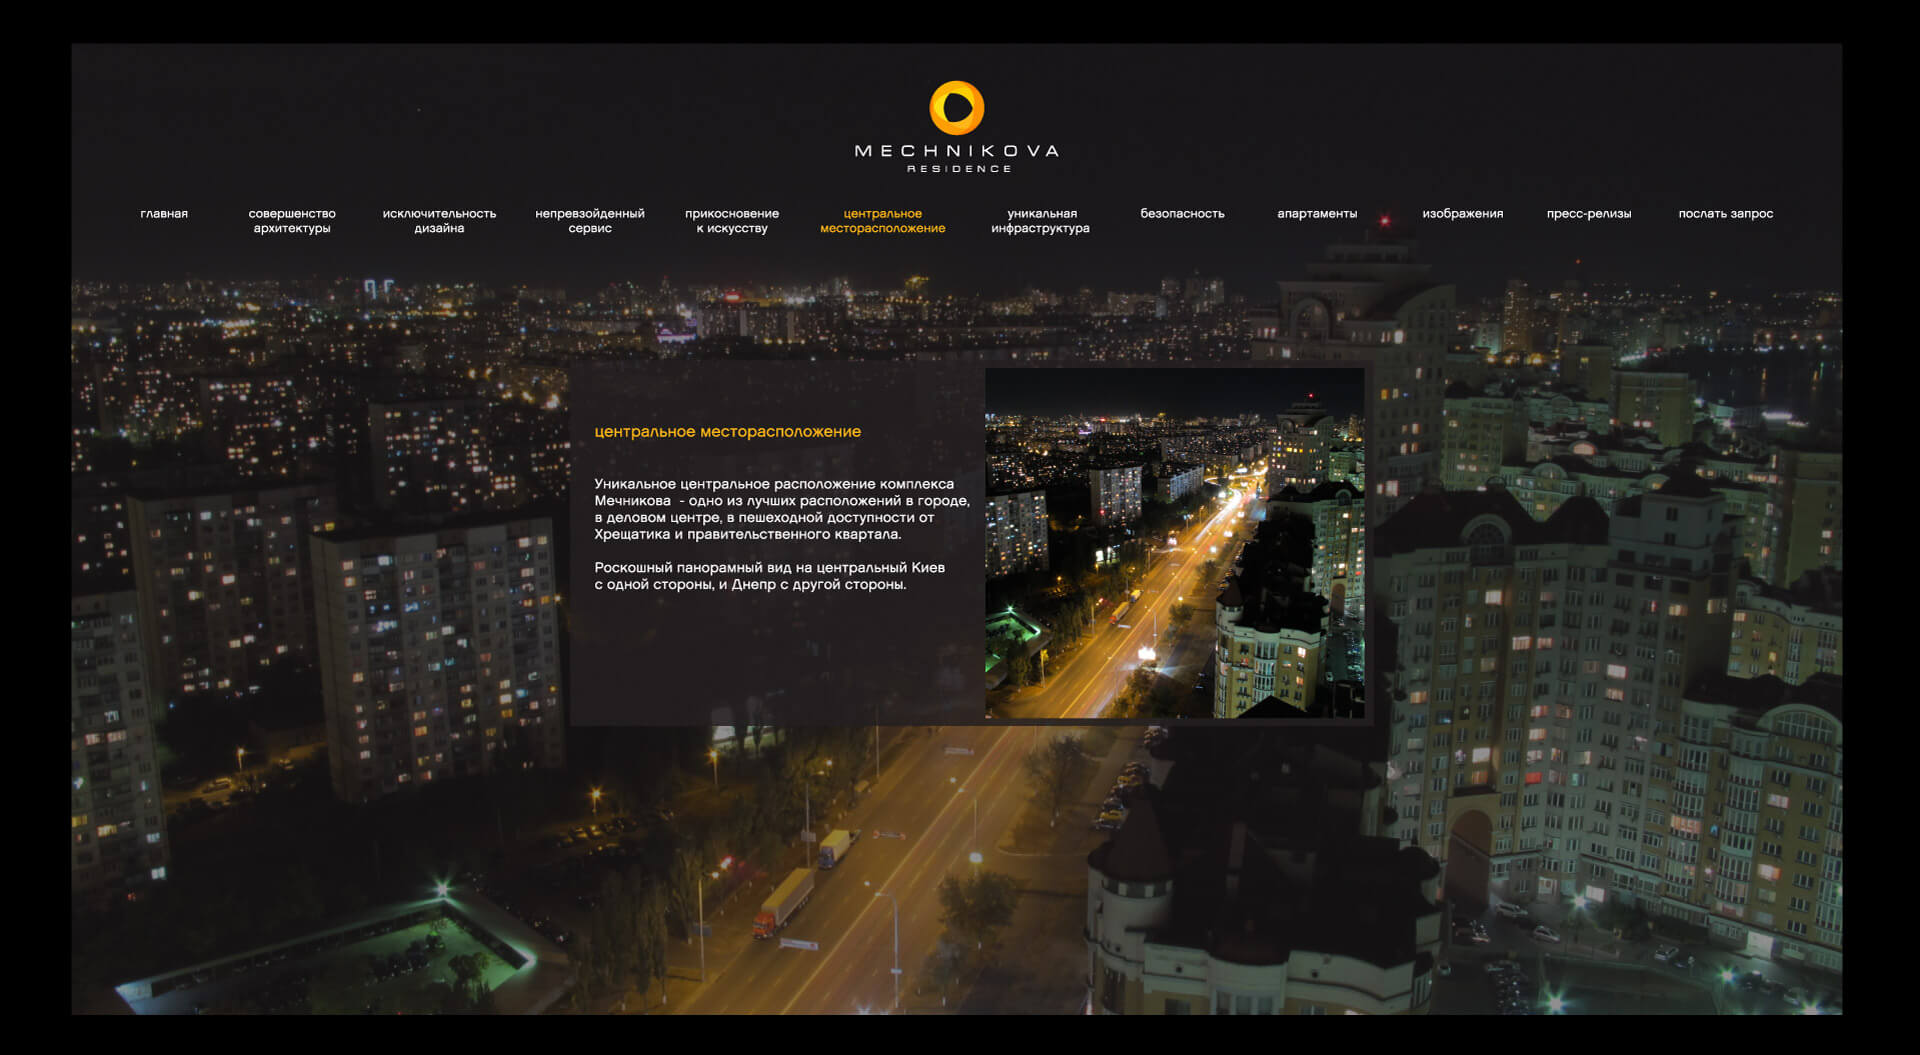 Residential luxury property branding, Mechnikova location, website design for Continuum Ukraine